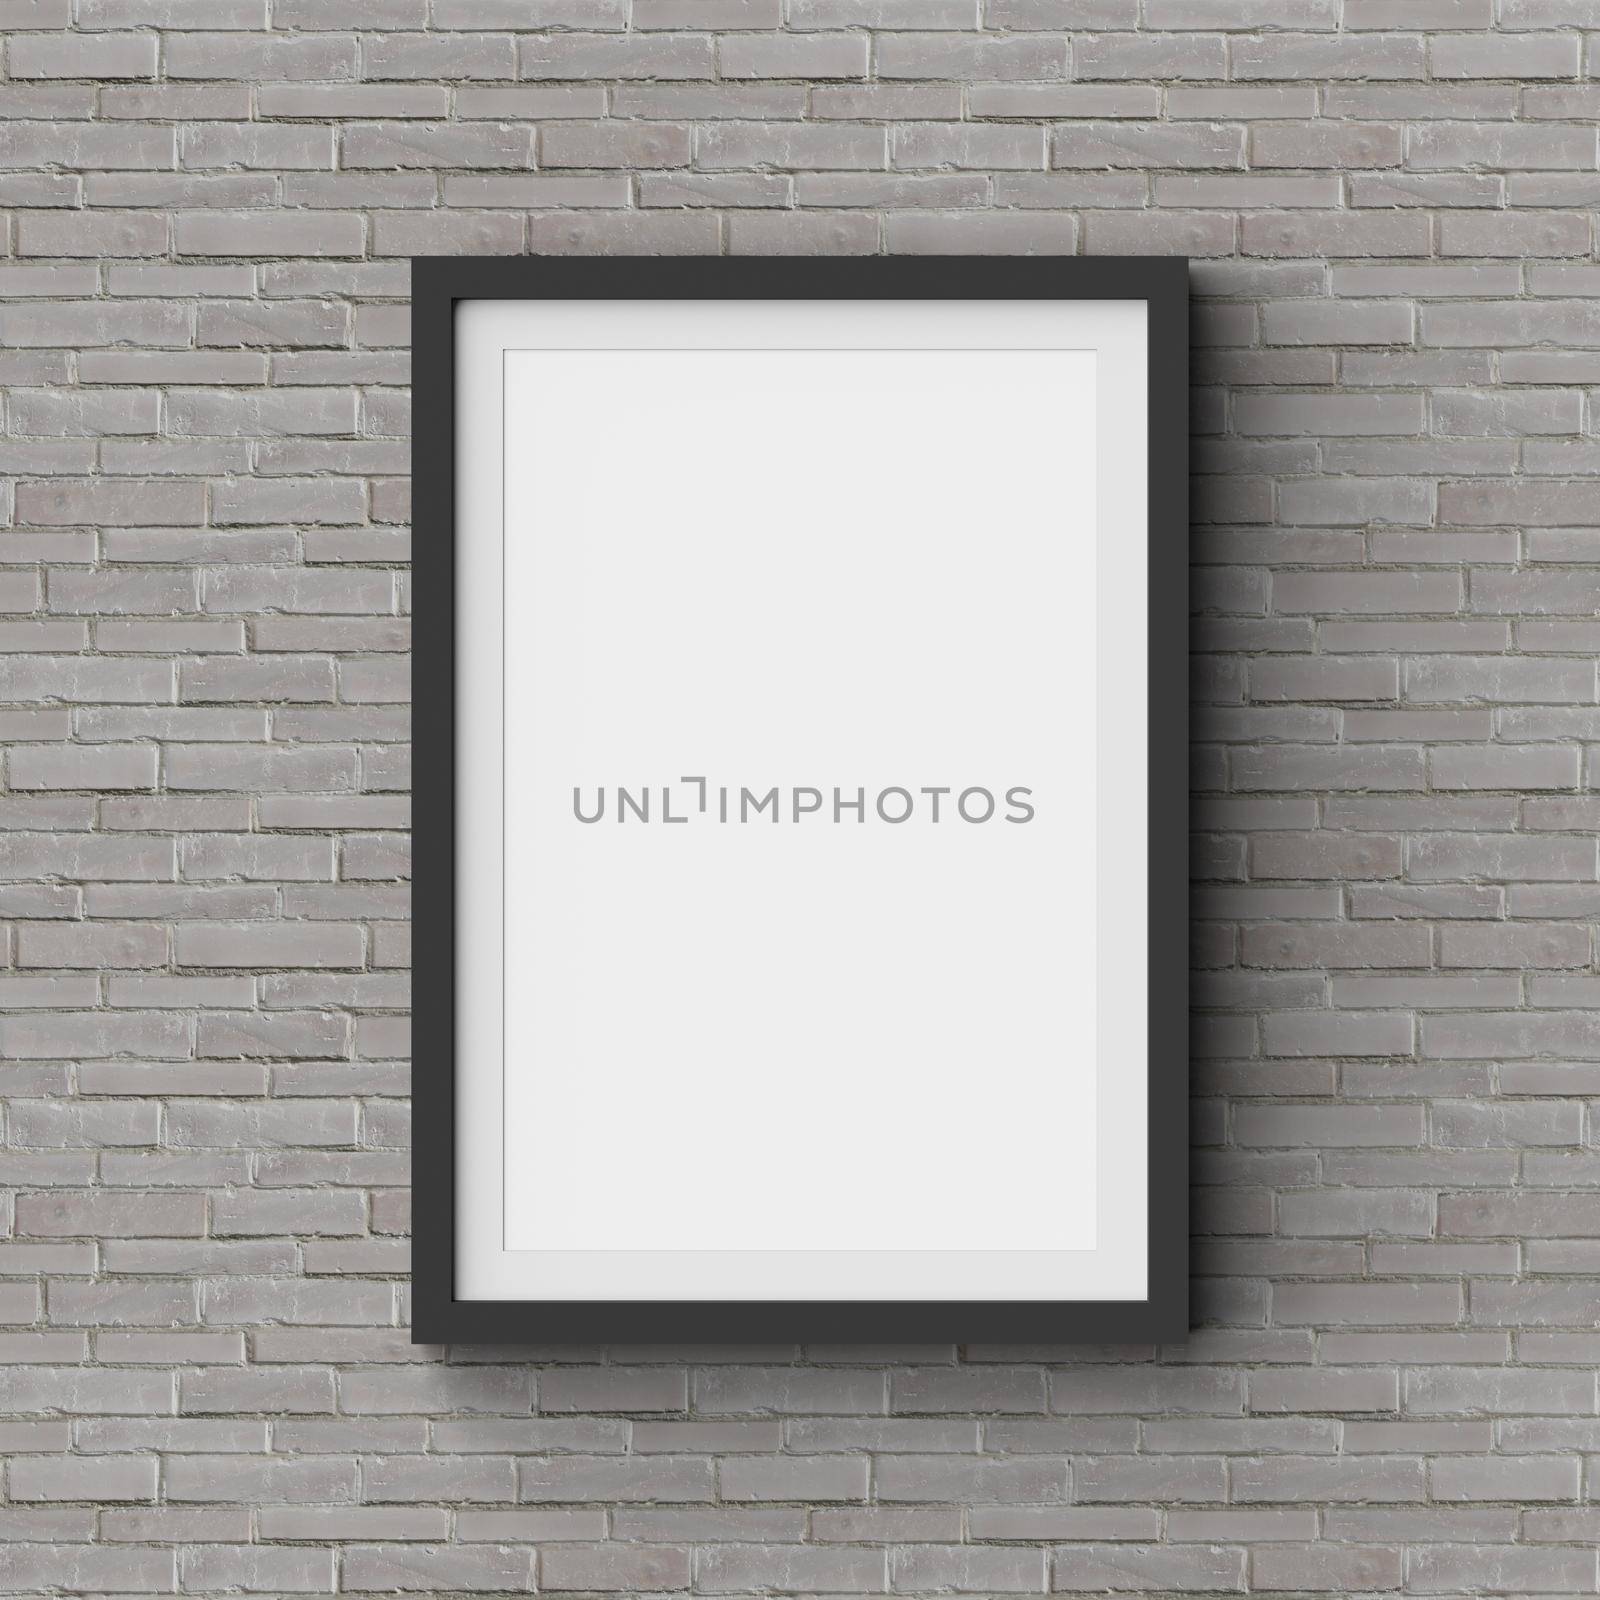 Blank photo frame mockup on a brick wall for advertisement, 3d illustration by nutzchotwarut